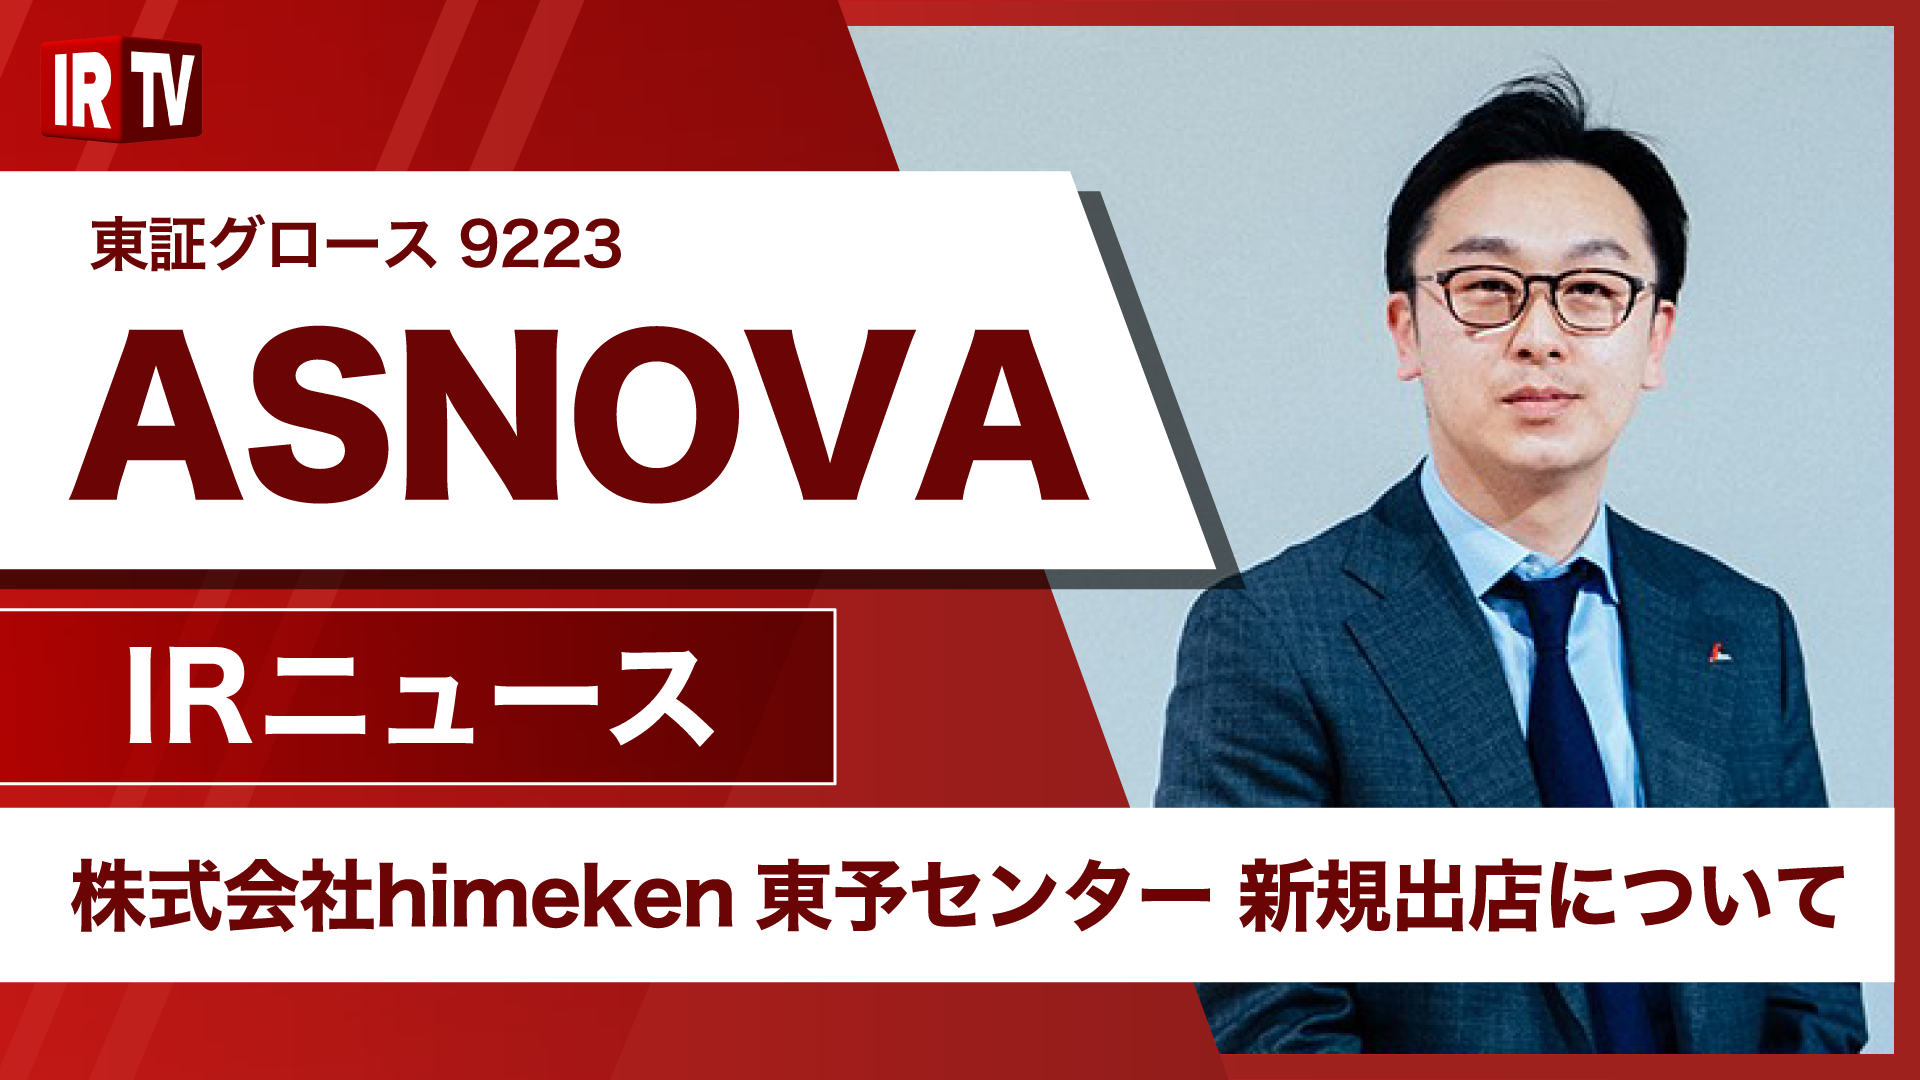 【IRTV 9223】ASNOVA/ASNOVA STATION 株式会社himeken東予センターを新規出店